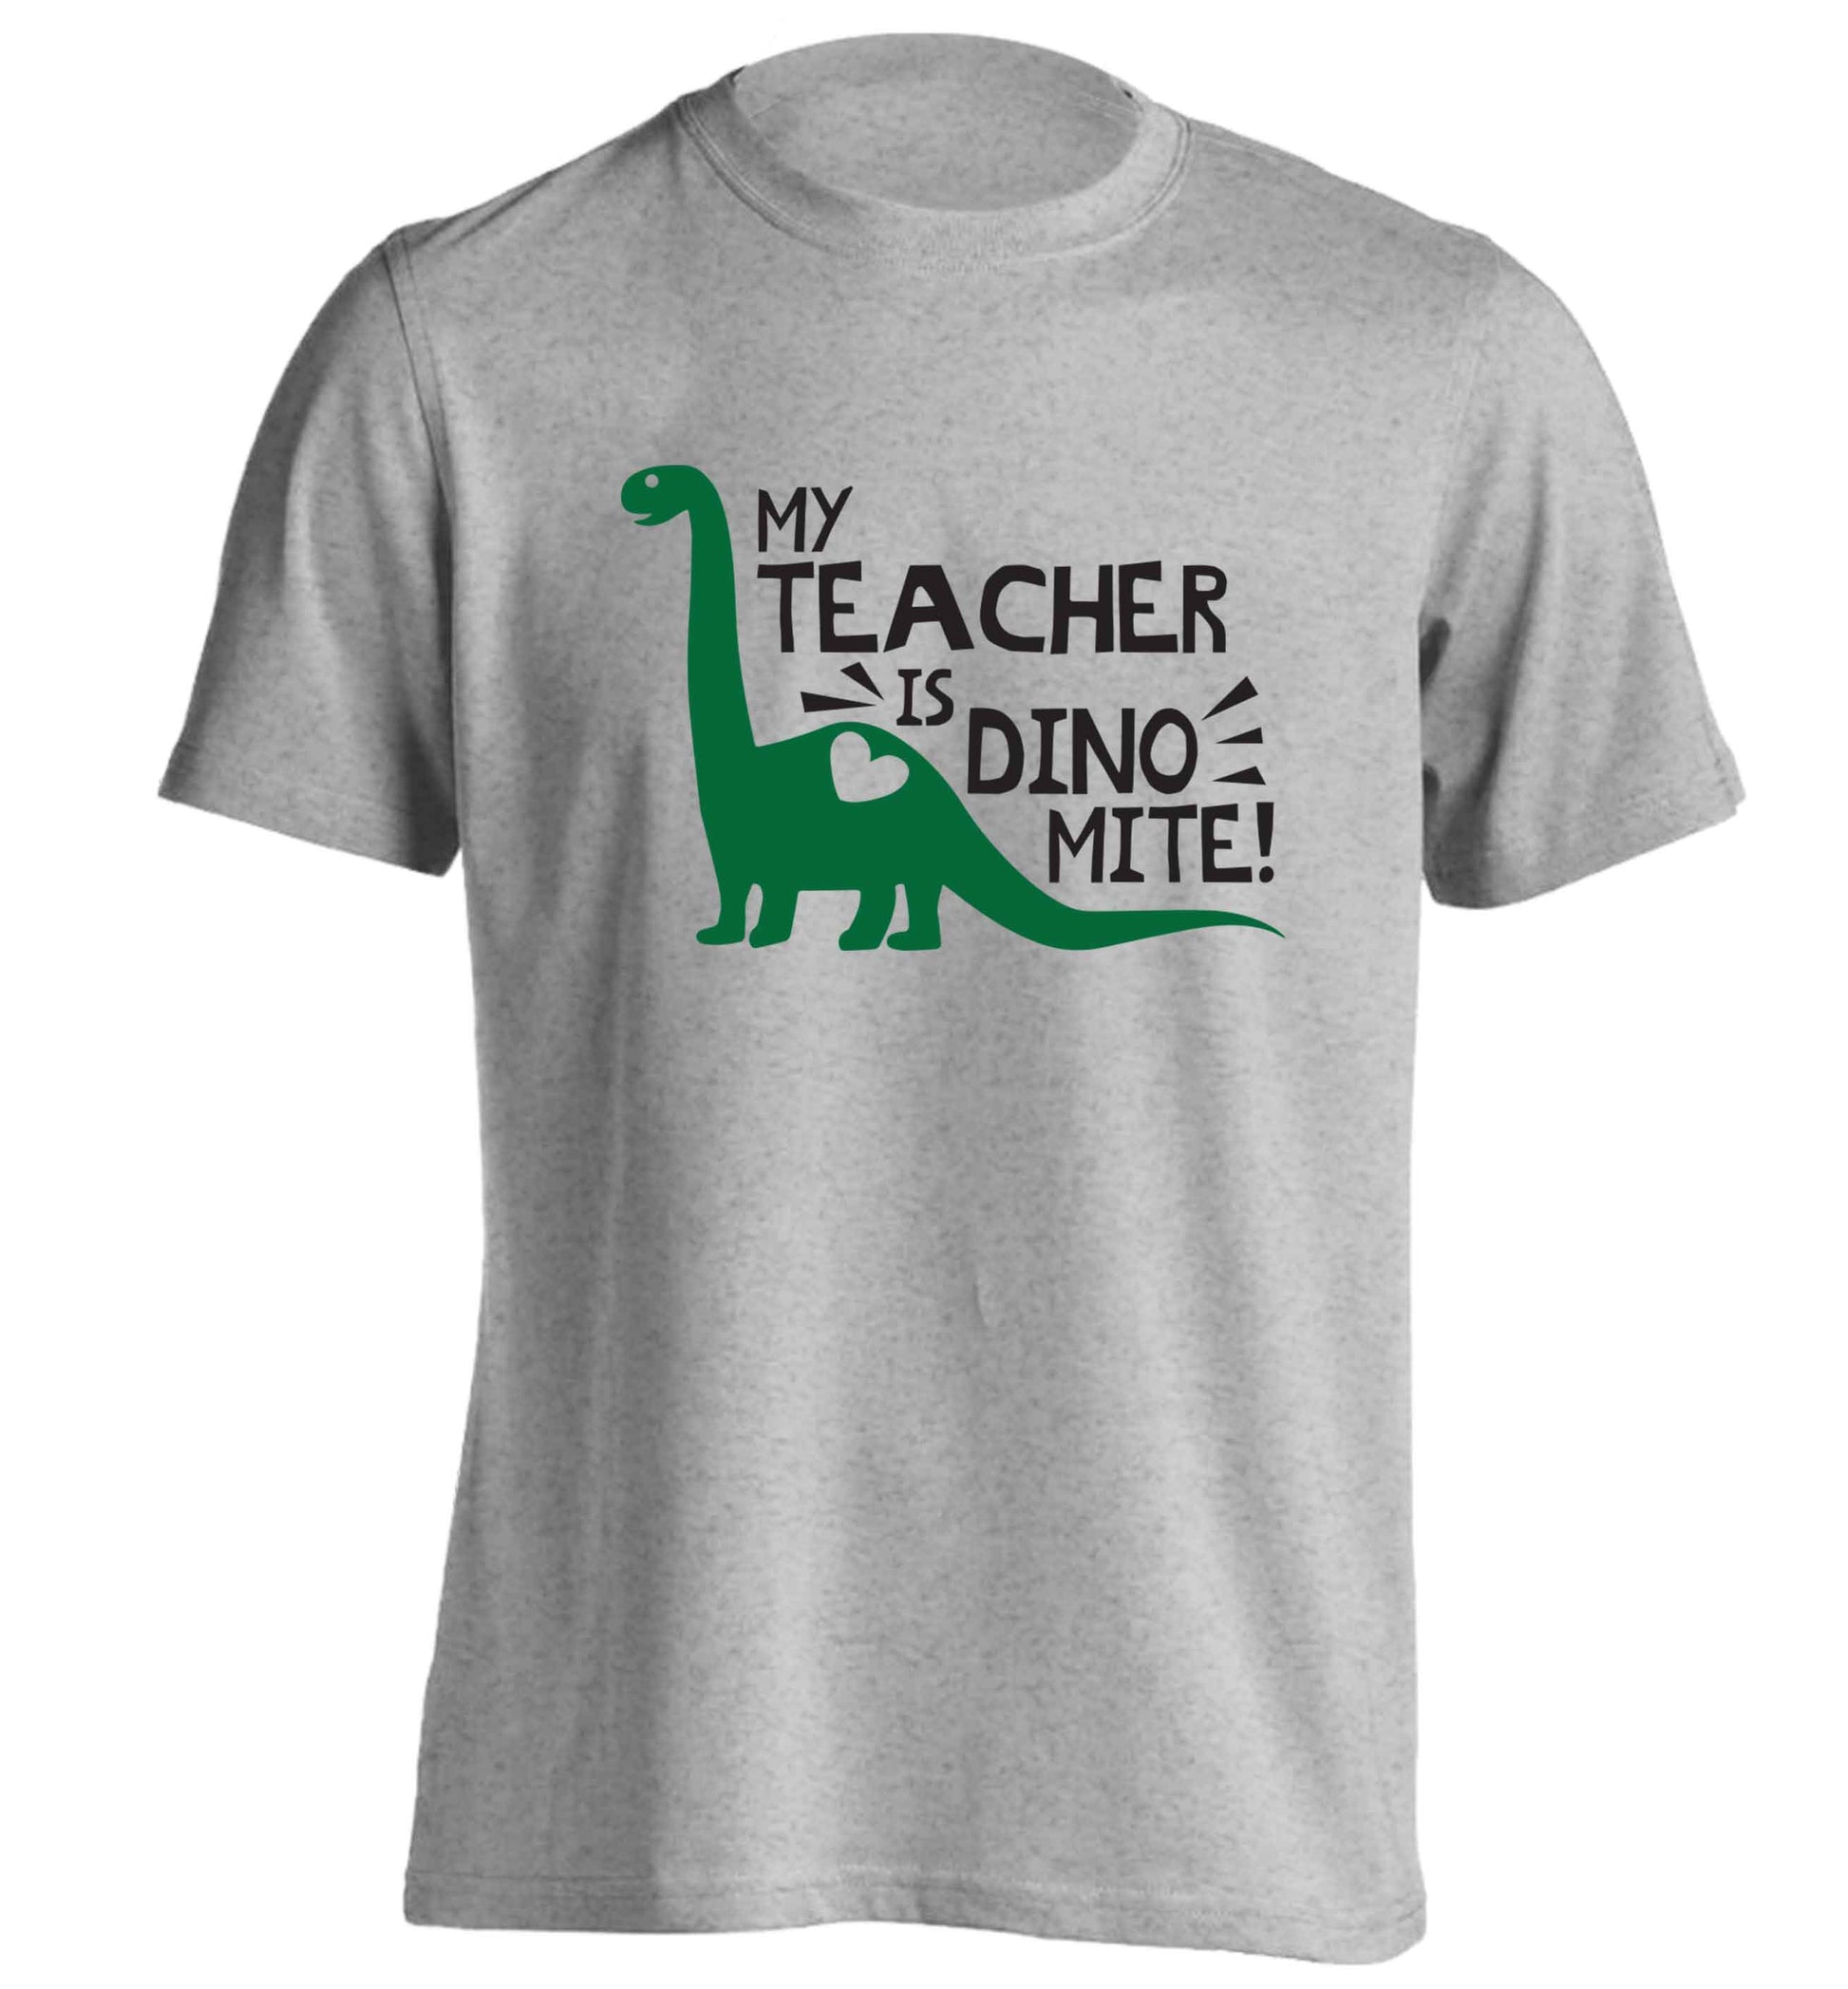 My teacher is dinomite! adults unisex grey Tshirt 2XL